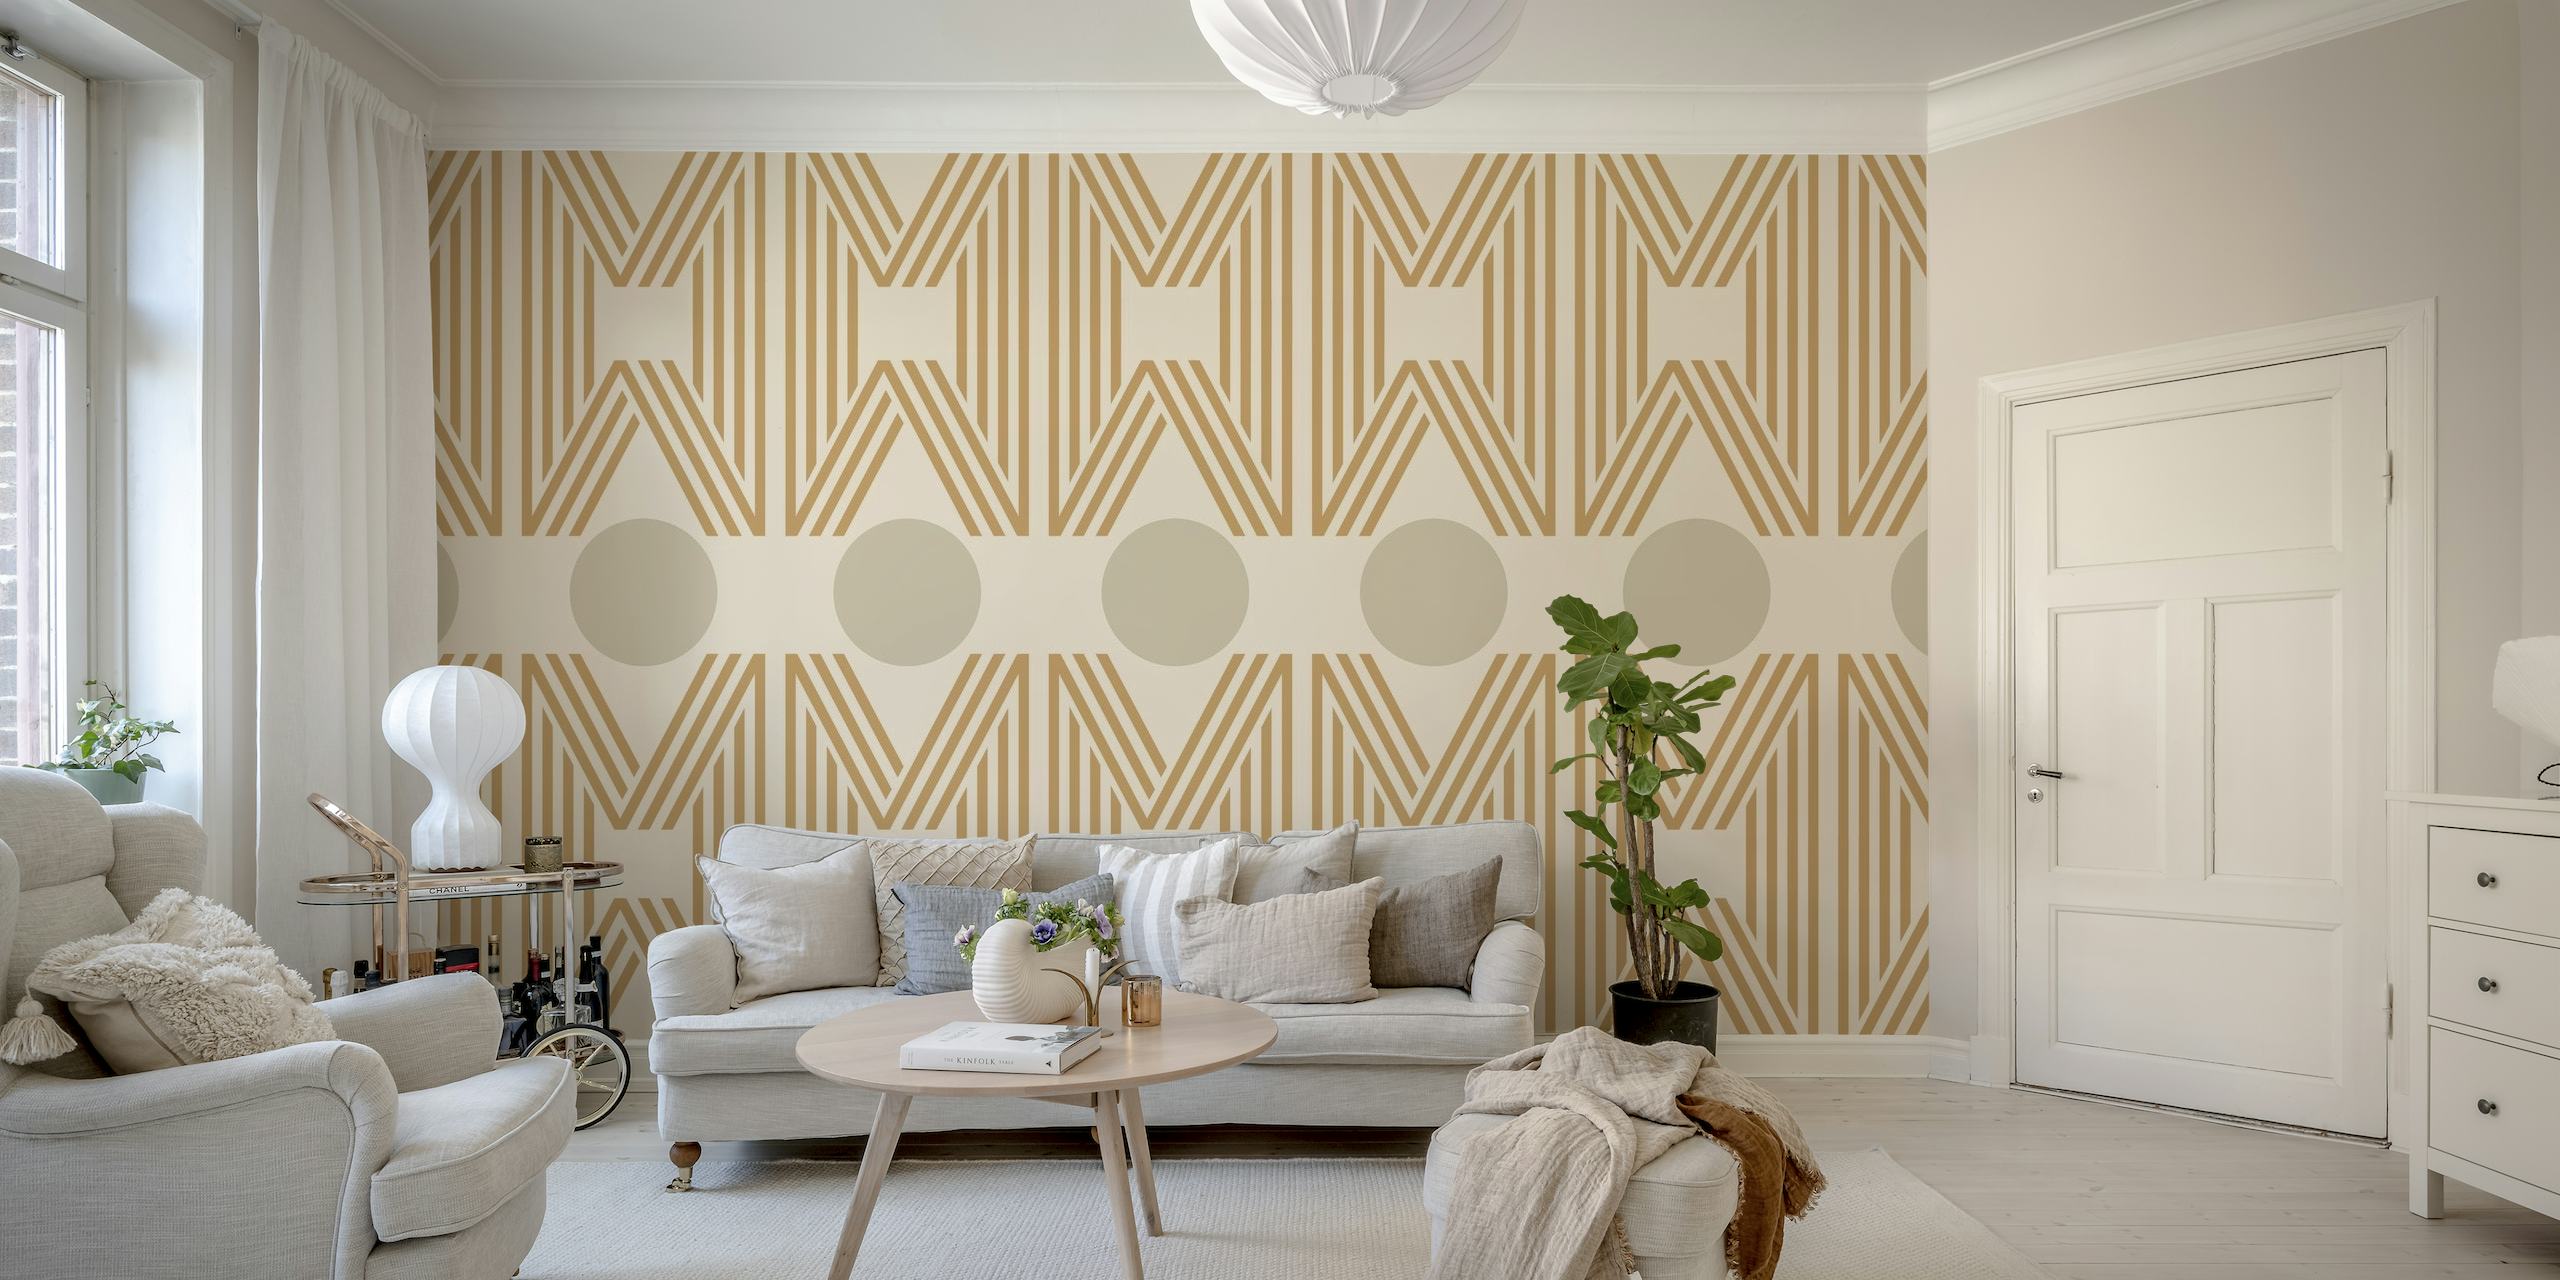 Elegante diseño mural de pared geométrico minimalista japonés en suaves tonos neutros